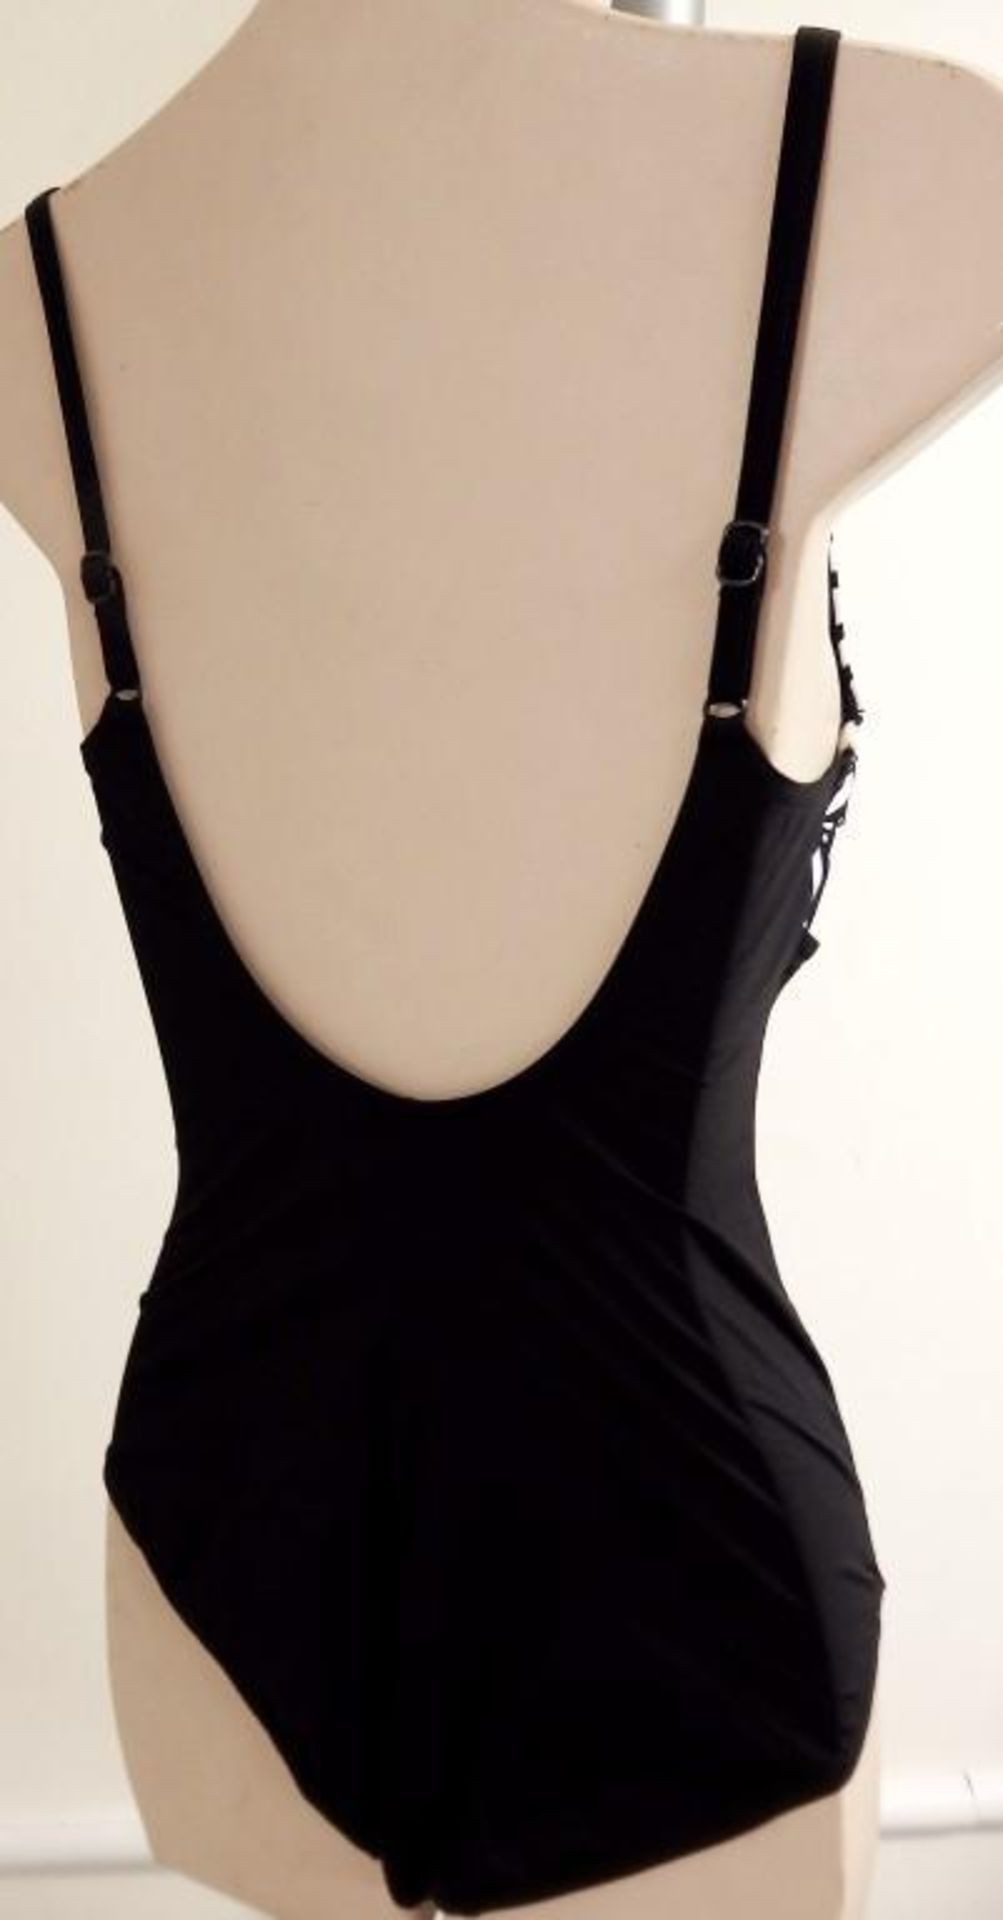 1 x Rasurel - Black/Ecru and vibrant patternedbustier -Cuba Swimsuit - R20738 - Size 2C - UK 32 - Image 5 of 7